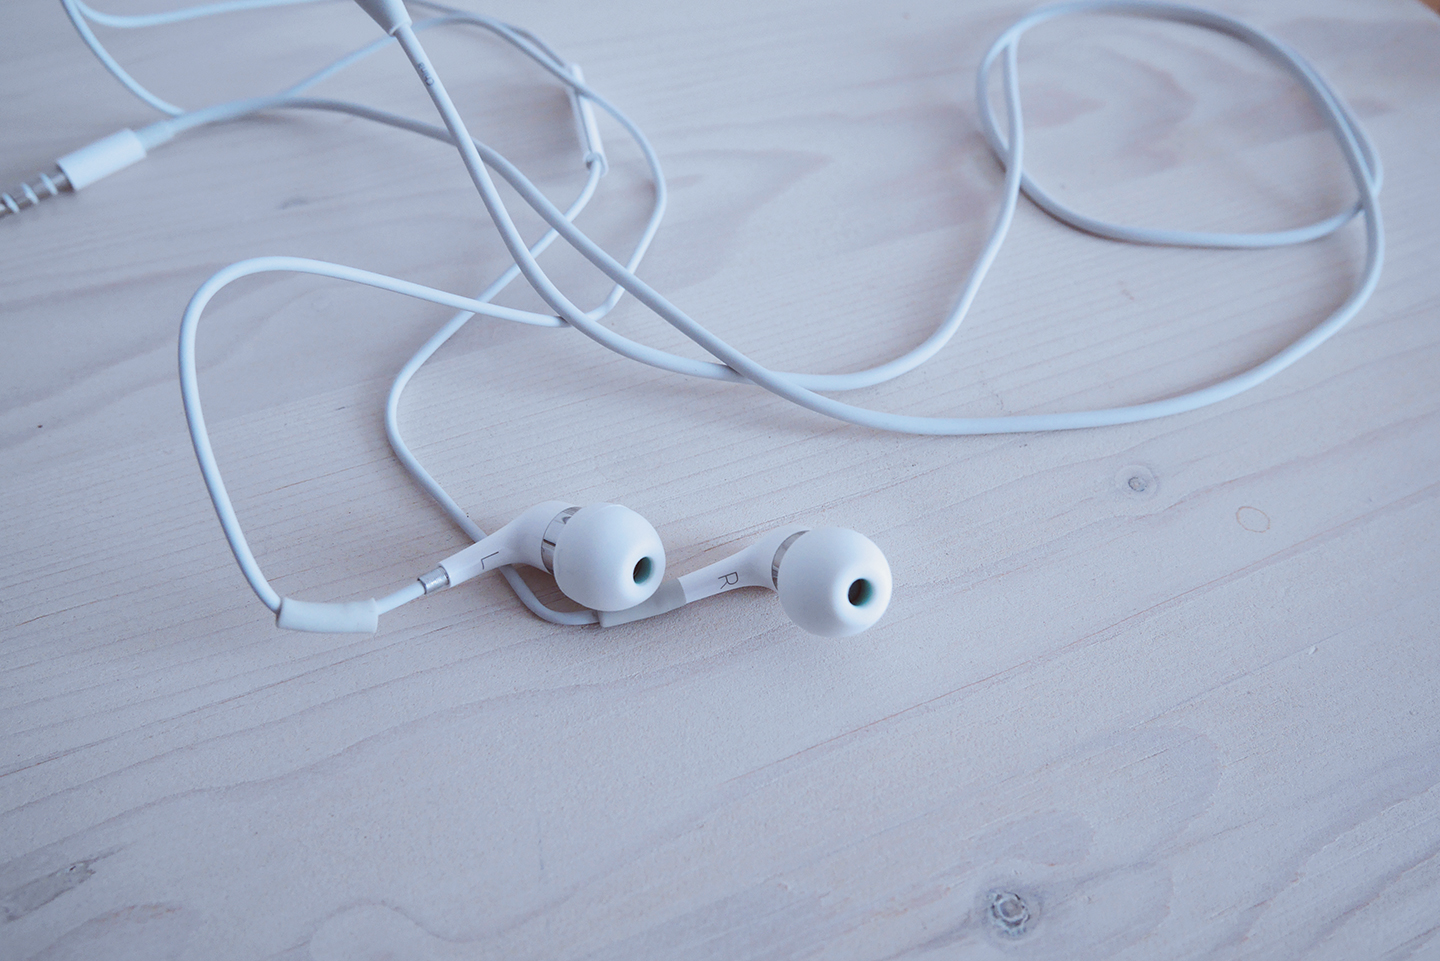 Apple In-Ear Headphones